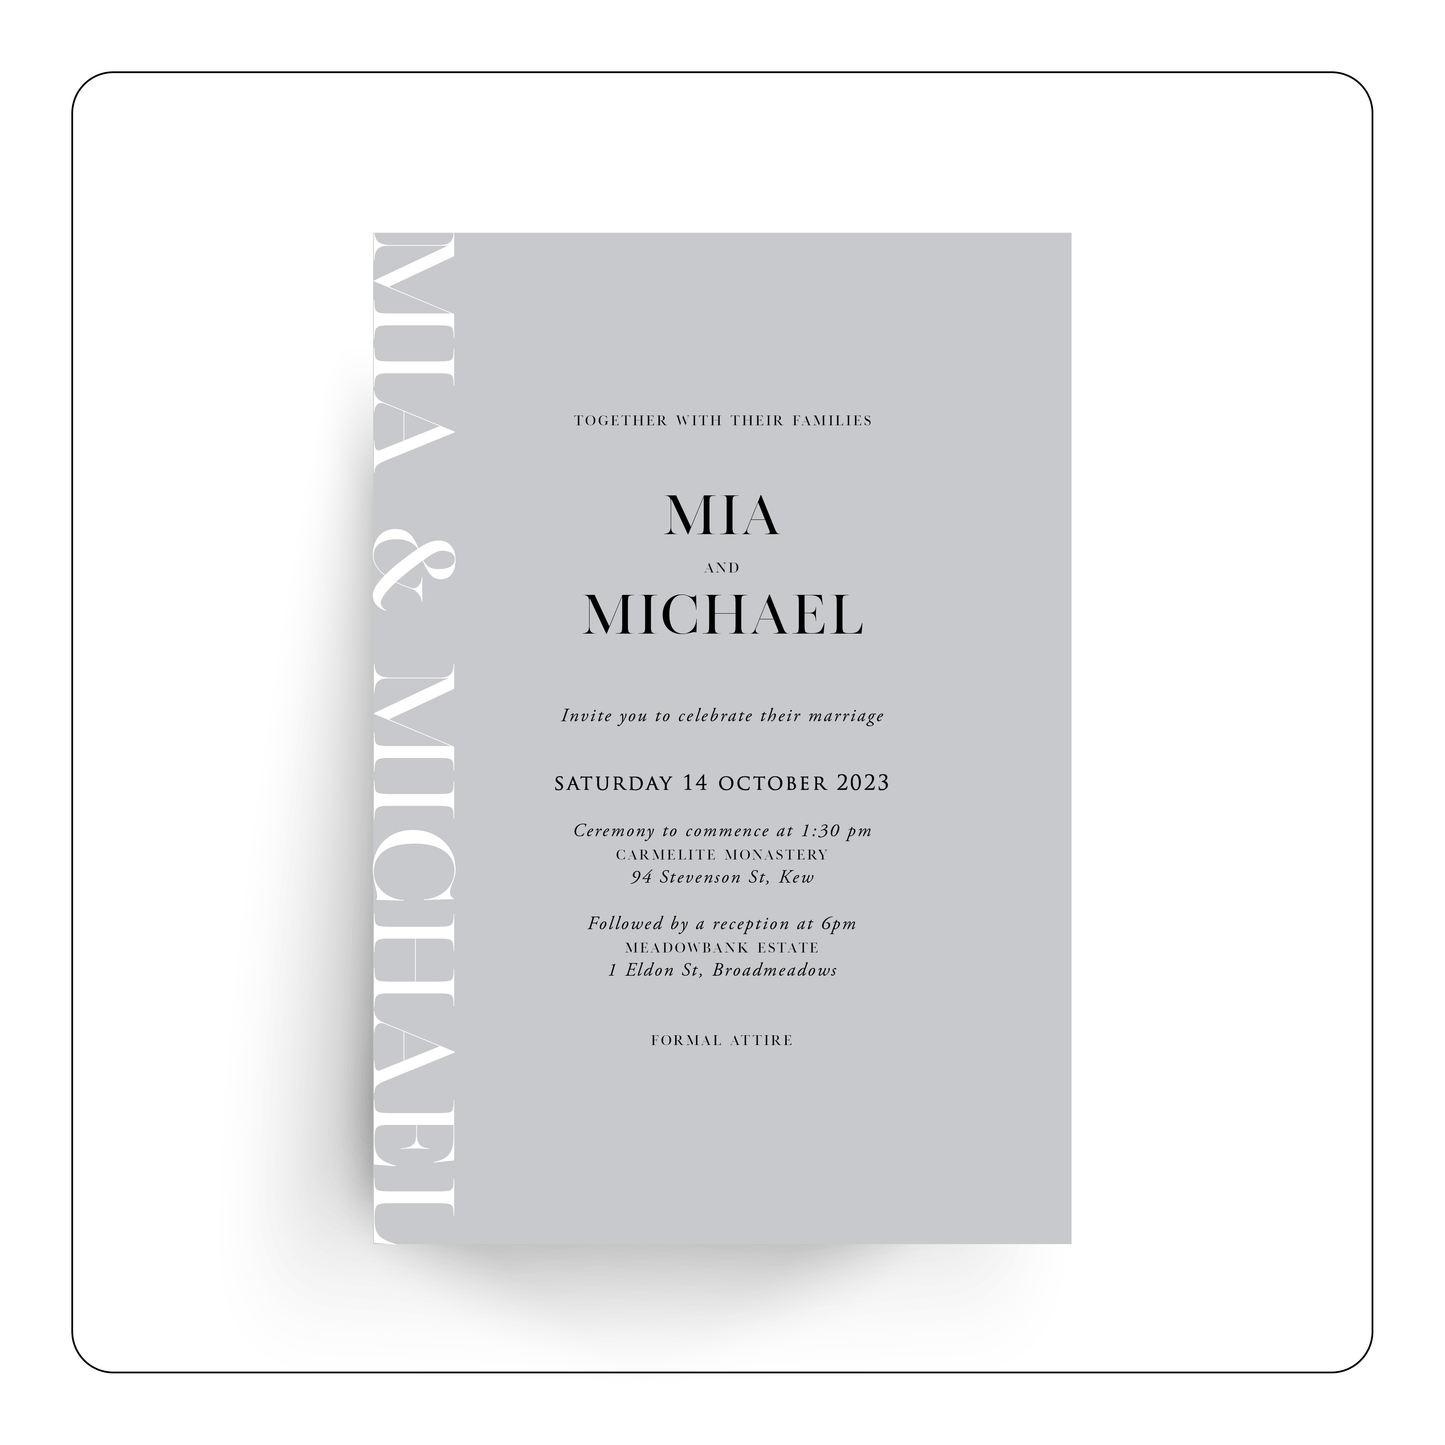 'Mia' Wedding Invitation